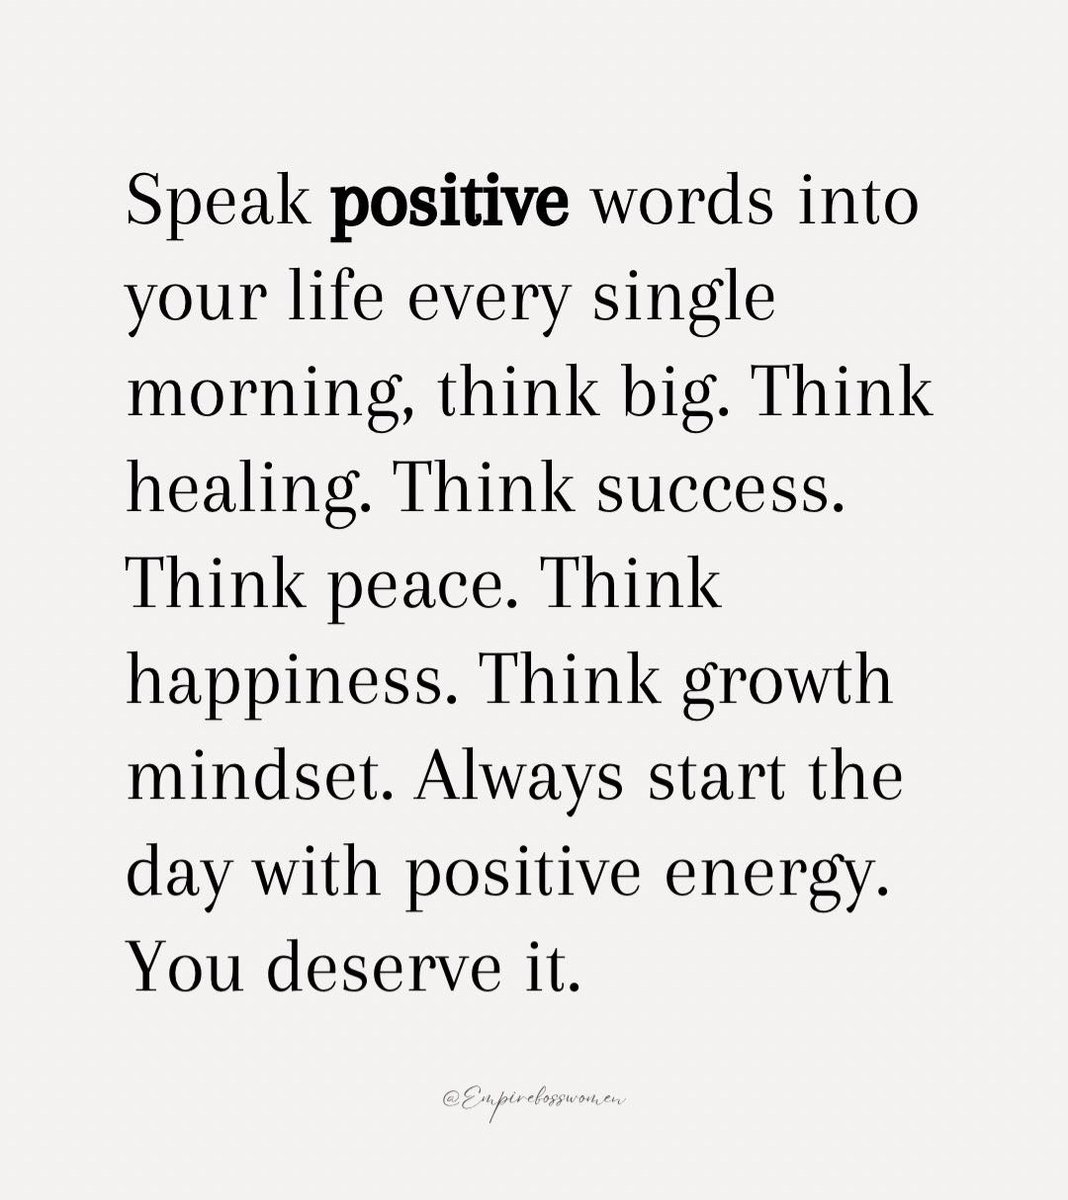 #winningmindset #positivity